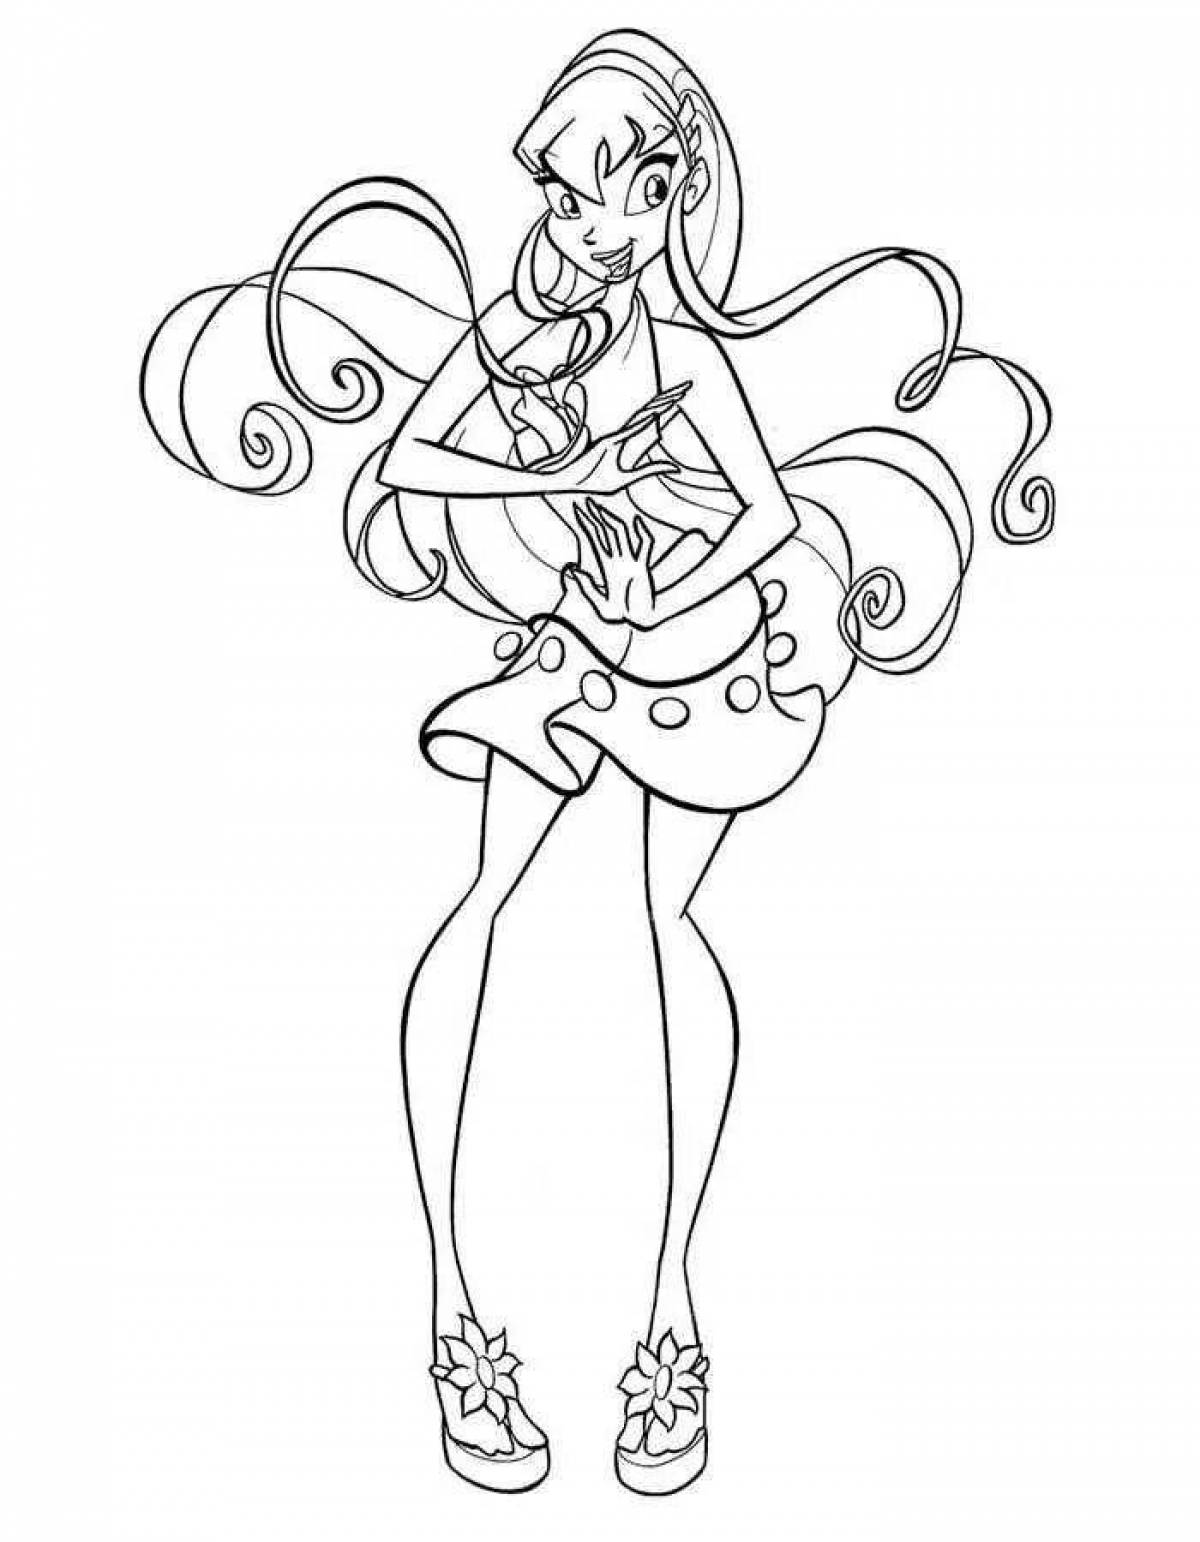 Fairy stella winx coloring page